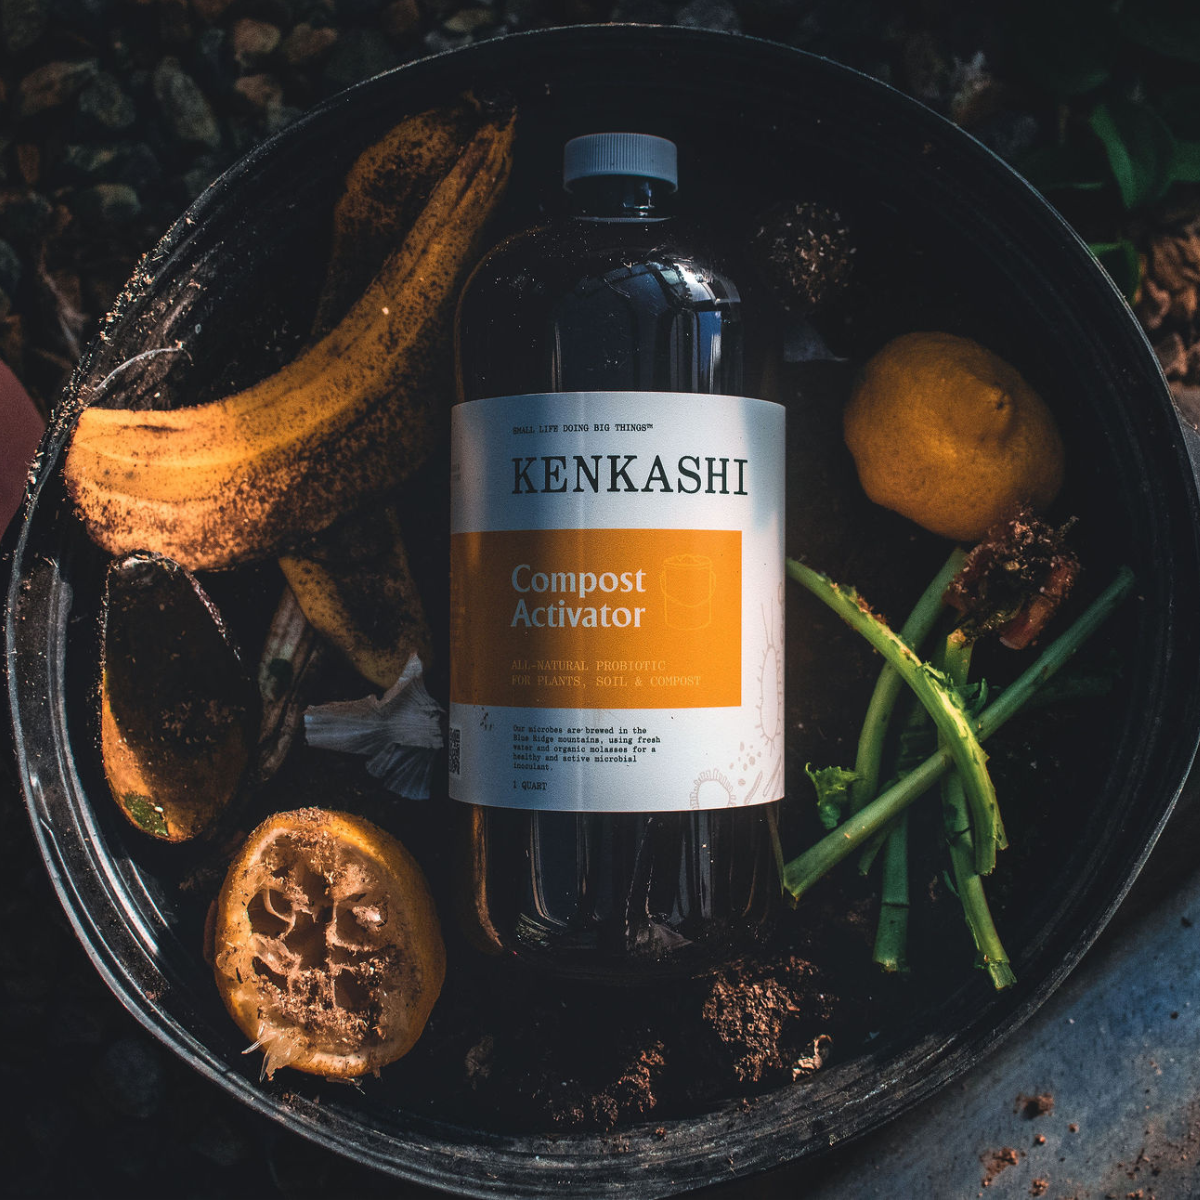 Kenkashi liquid probiotics for outdoor compost piles